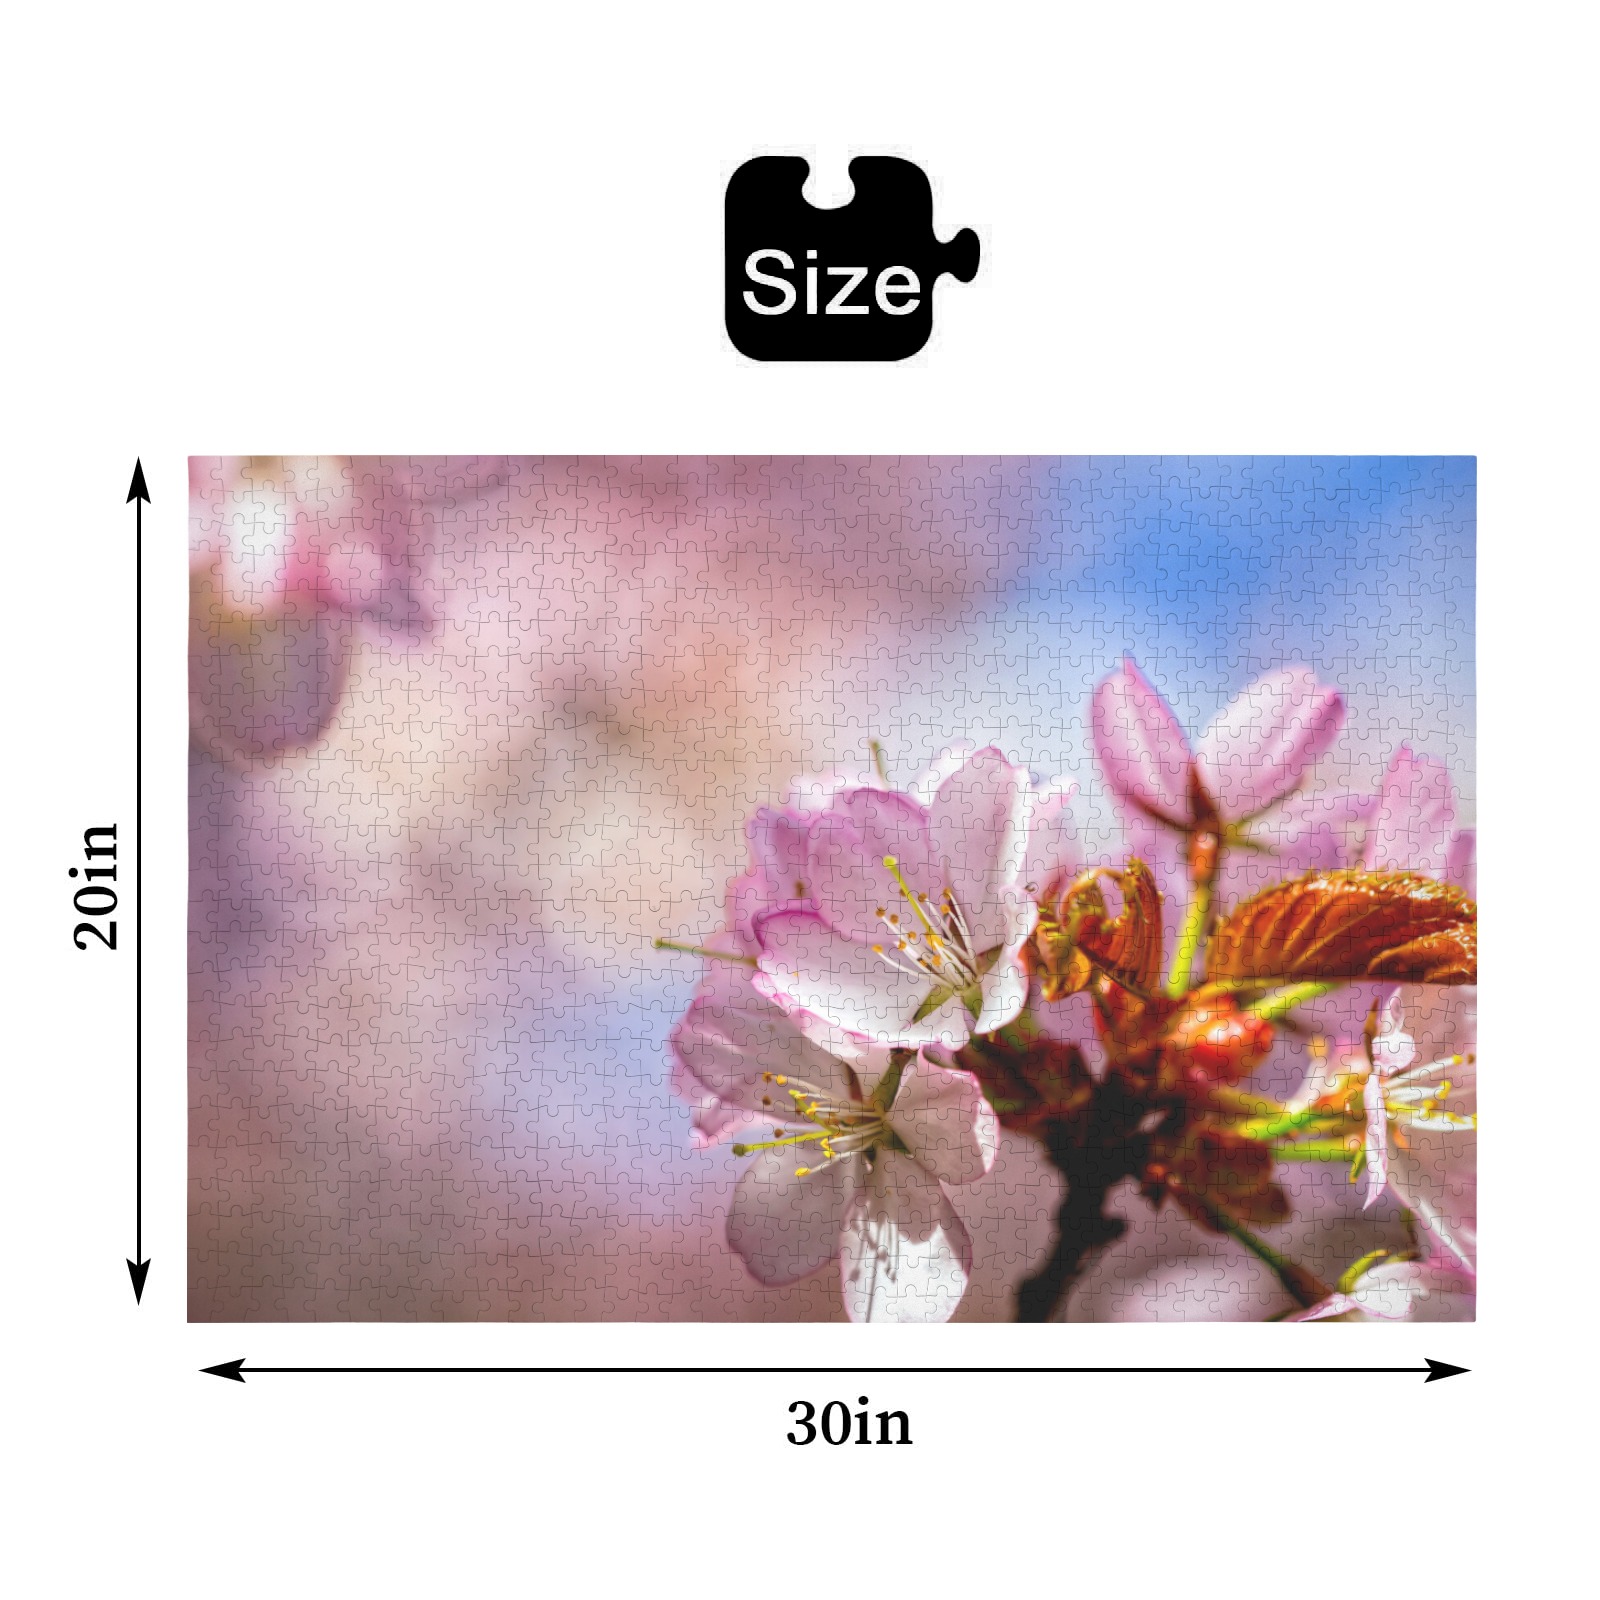 Short life, eternal magic of sakura cherry flowers 1000-Piece Wooden Jigsaw Puzzle (Horizontal)